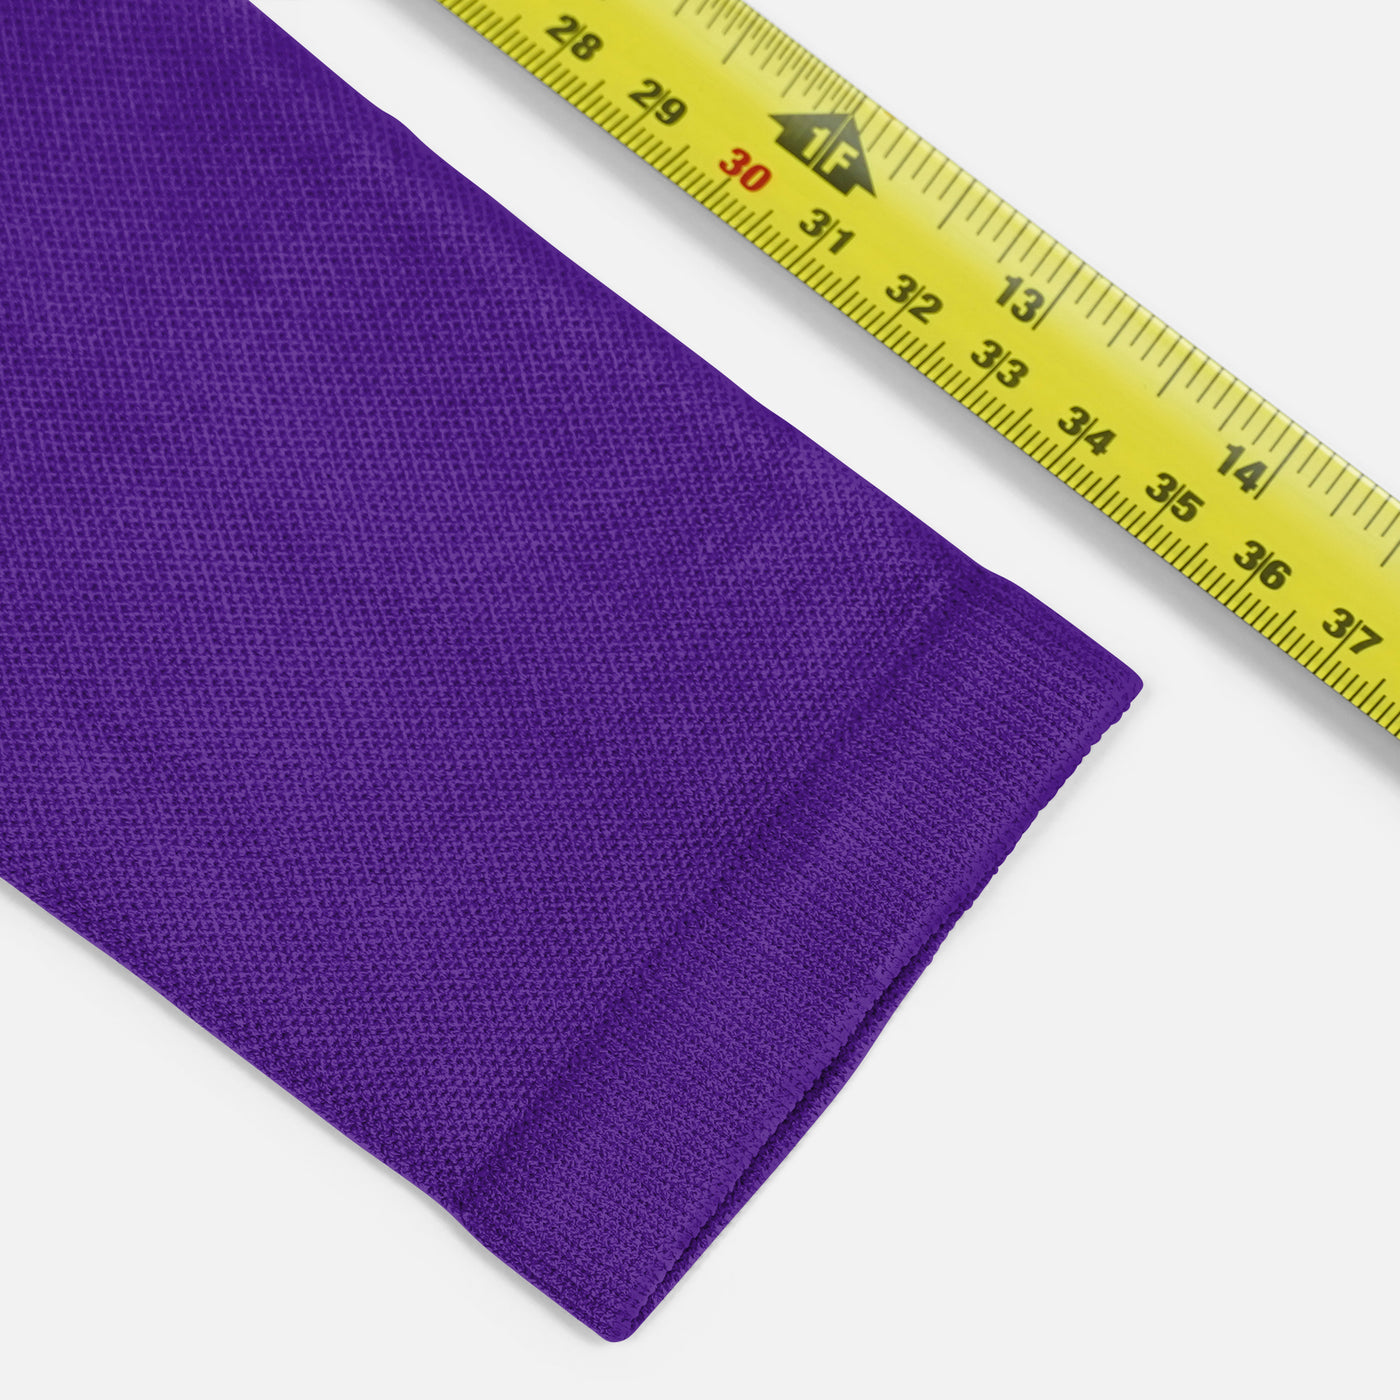 Hue Purple One Size Fits All Arm Sleeve